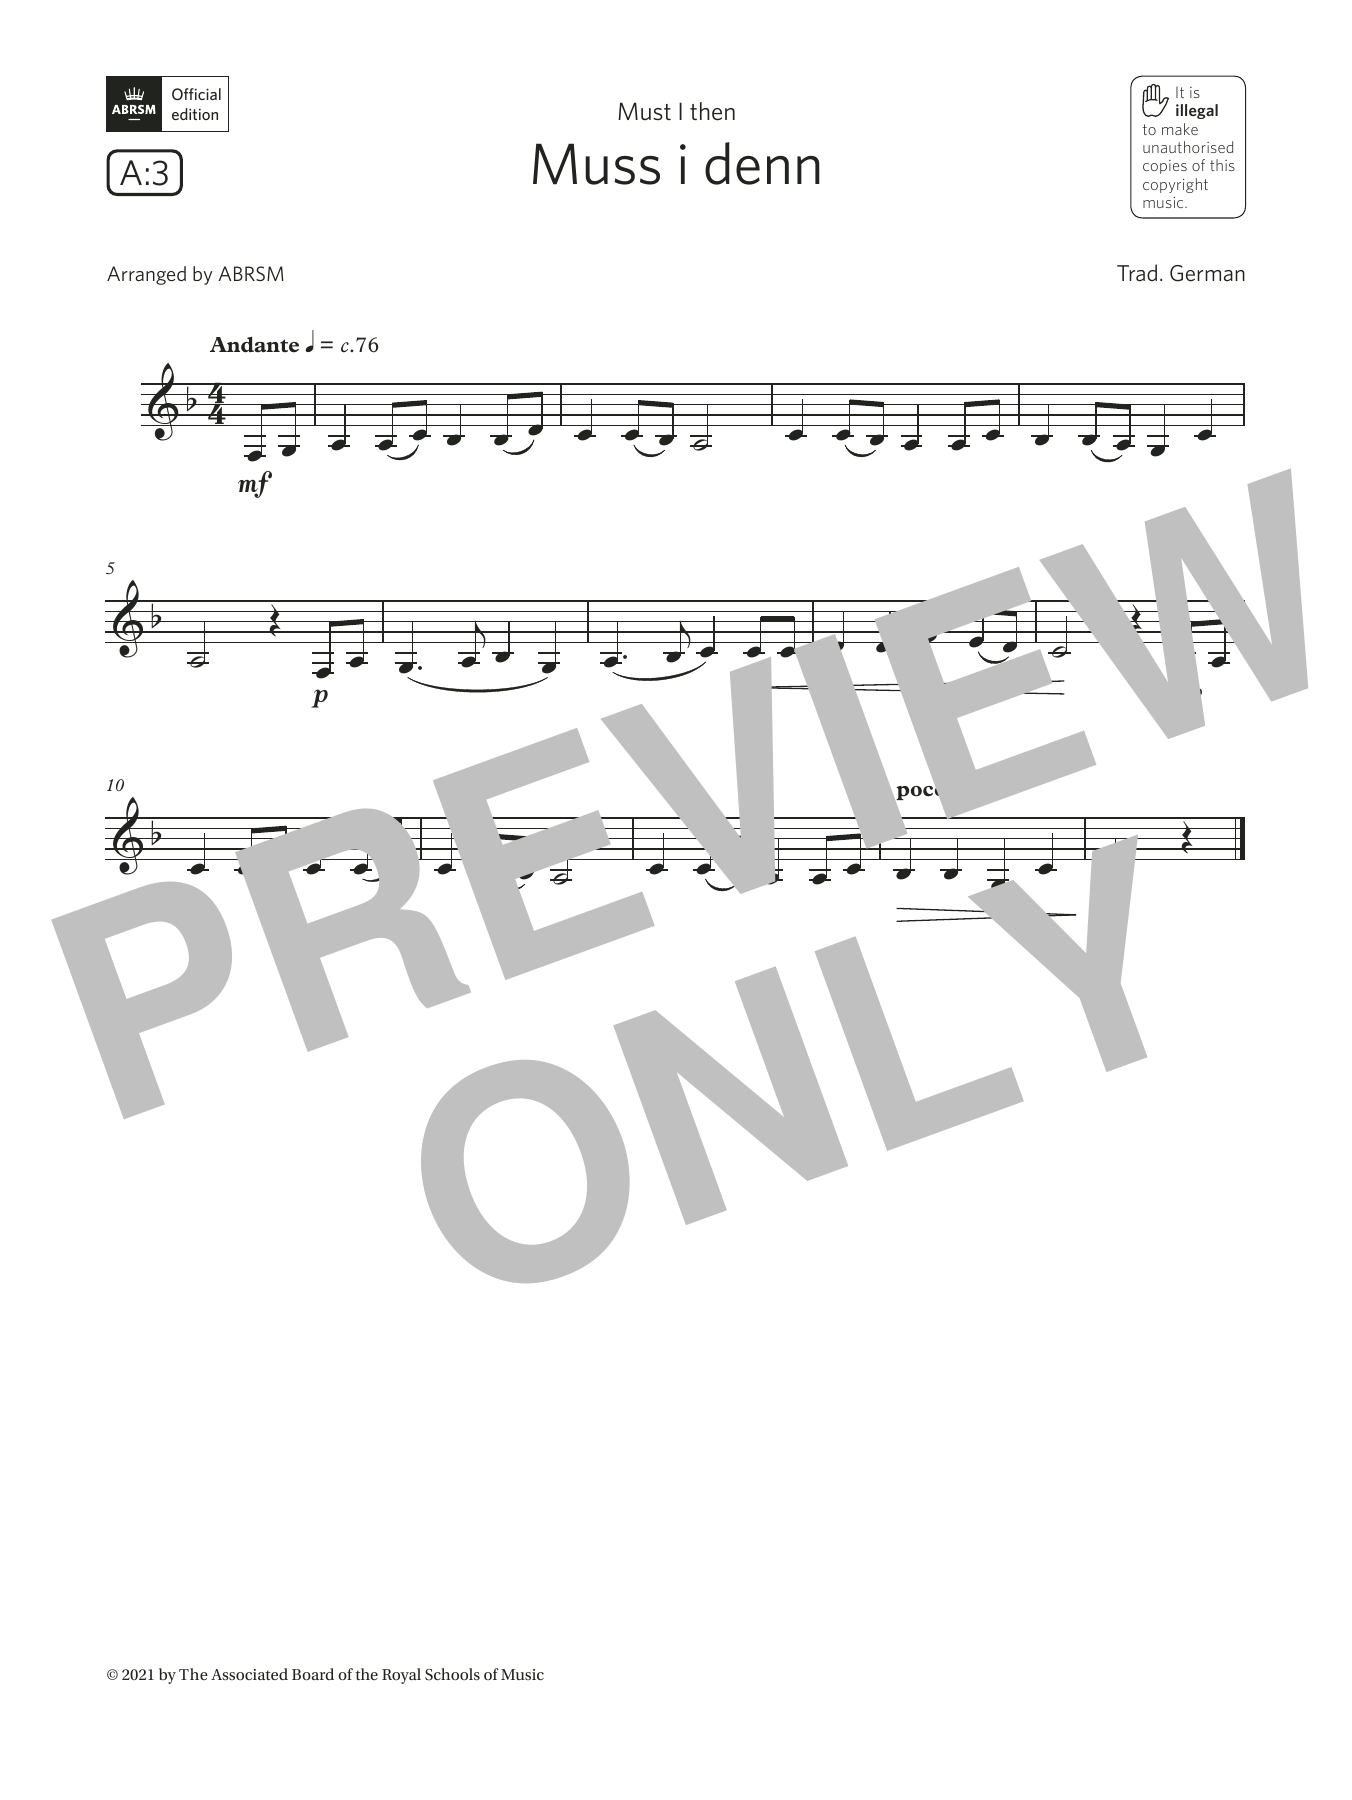 Download Trad. German Muss i denn (Grade 1 List A3 from the Sheet Music